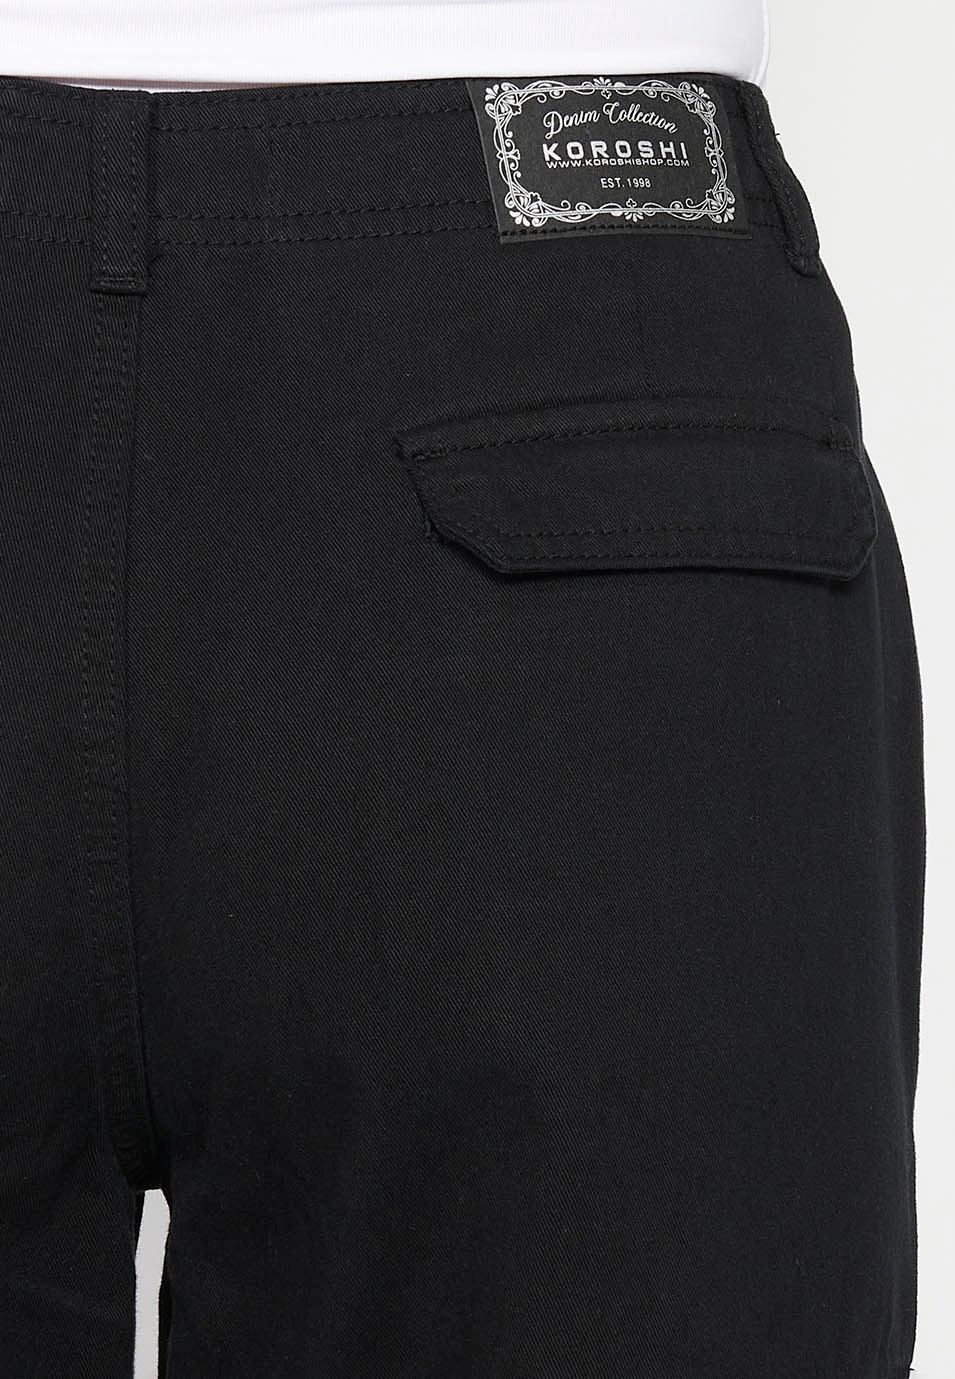 Pantalón largo con bolsillos cargo de algodón, color negro para mujer